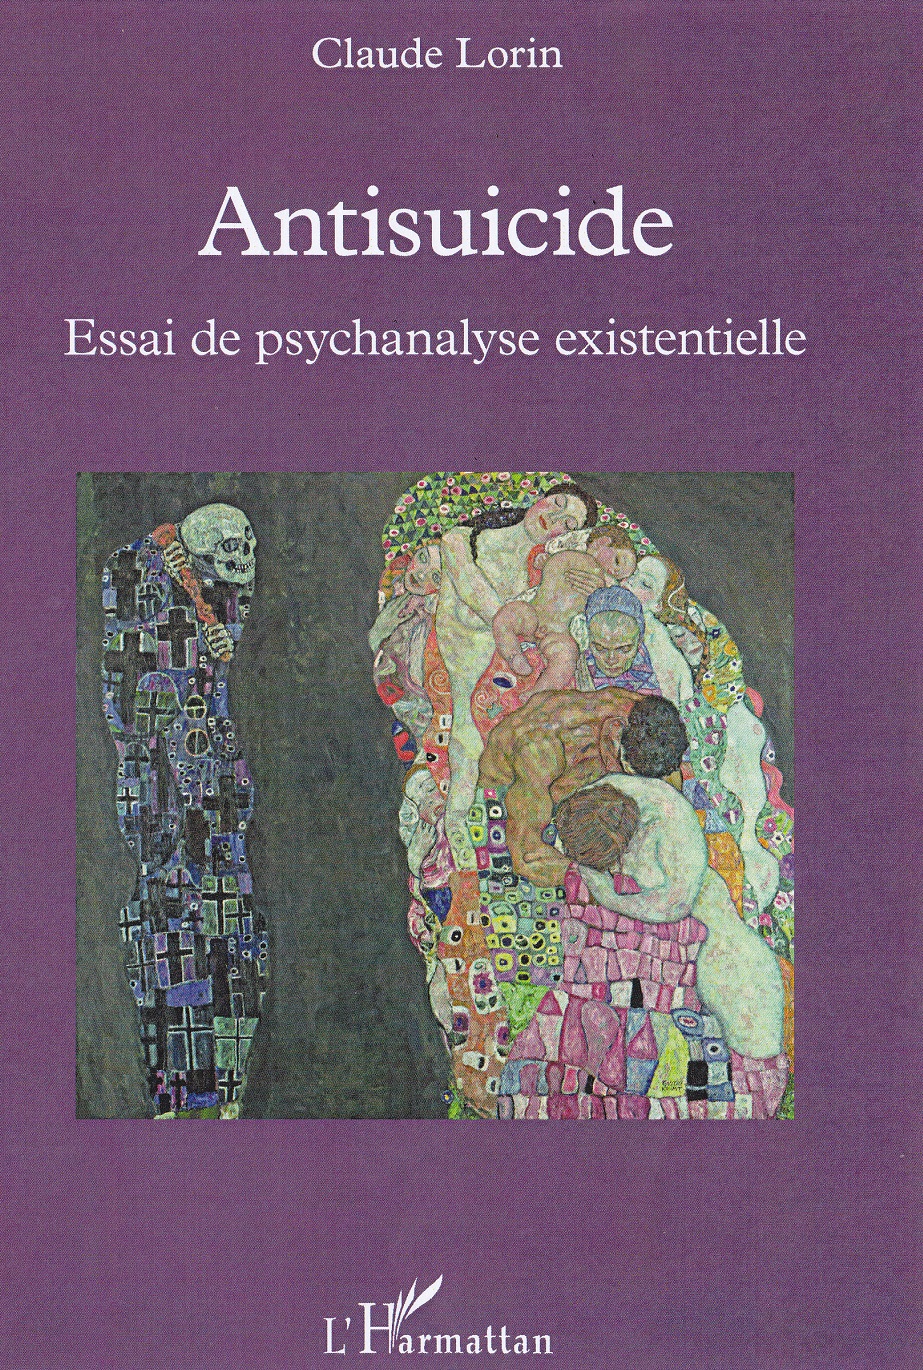 livre claude lorin Antisuicide, Essai de psychanalyse existentielle